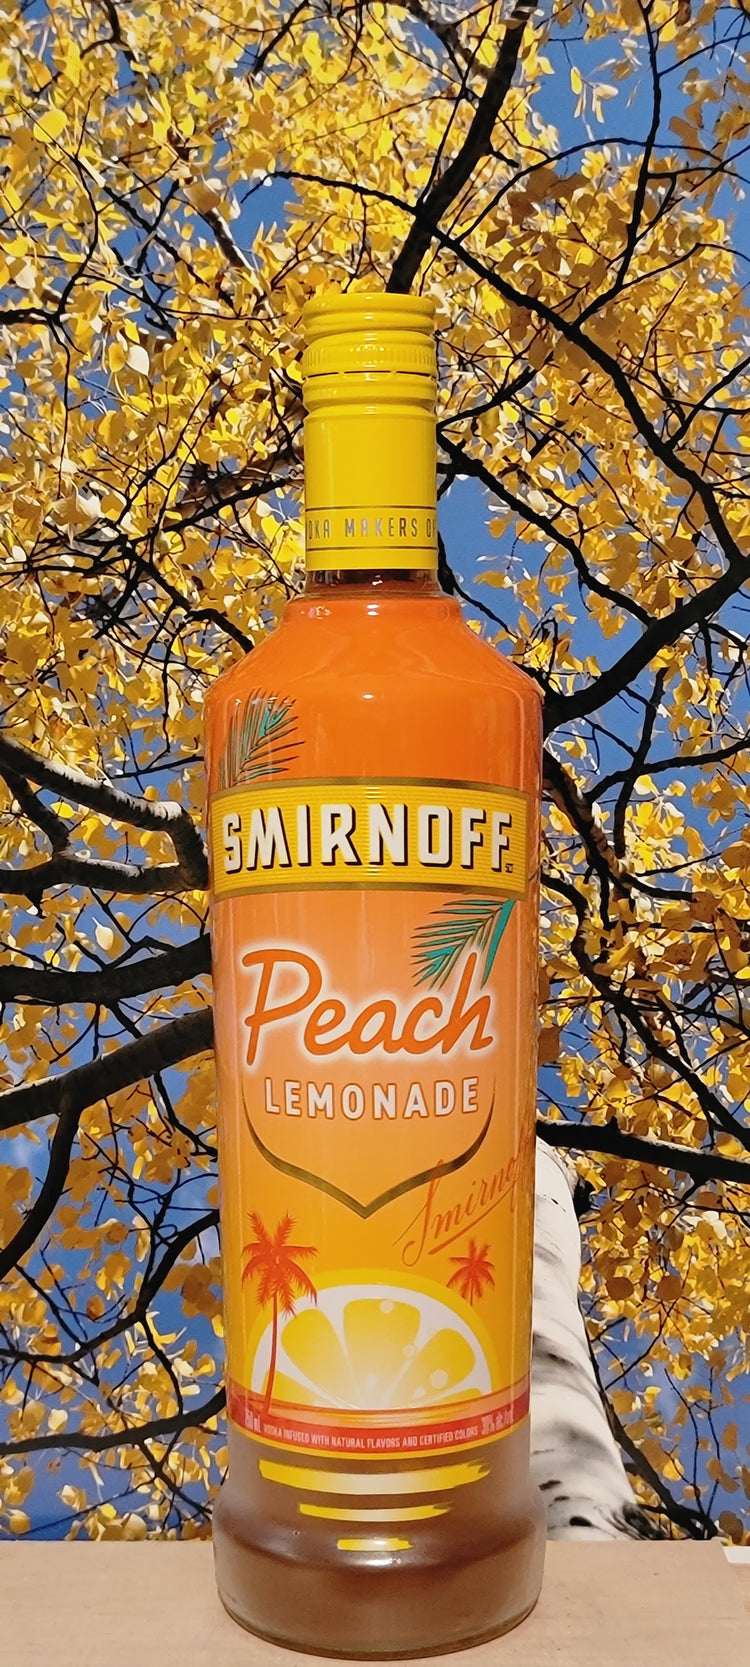 Smirnoff peach lemonade vodka